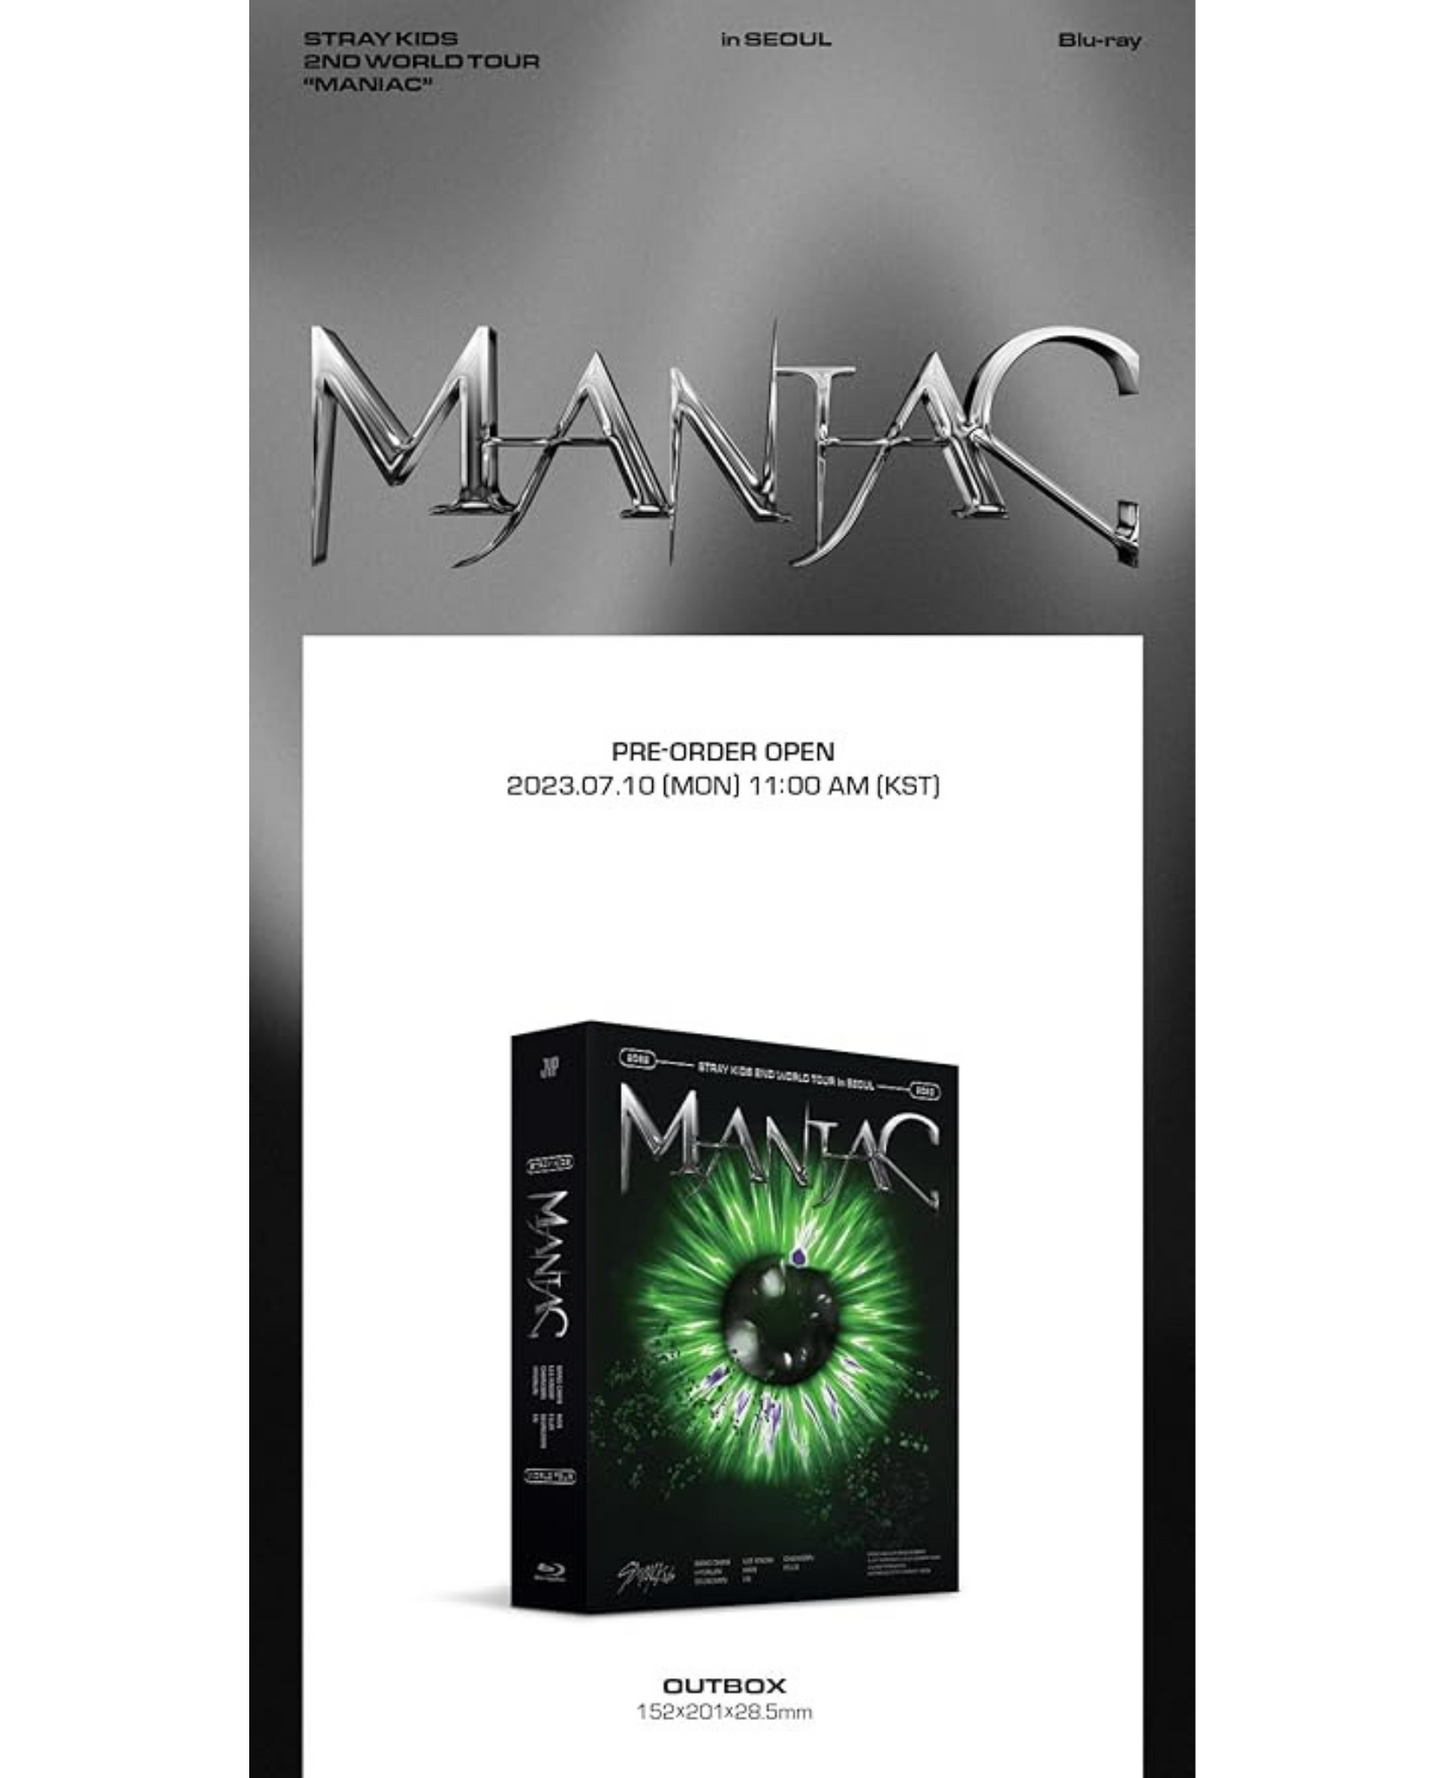 STRAY KIDS - 2nd World Tour “MANIAC” in Seoul (Blu-ray)